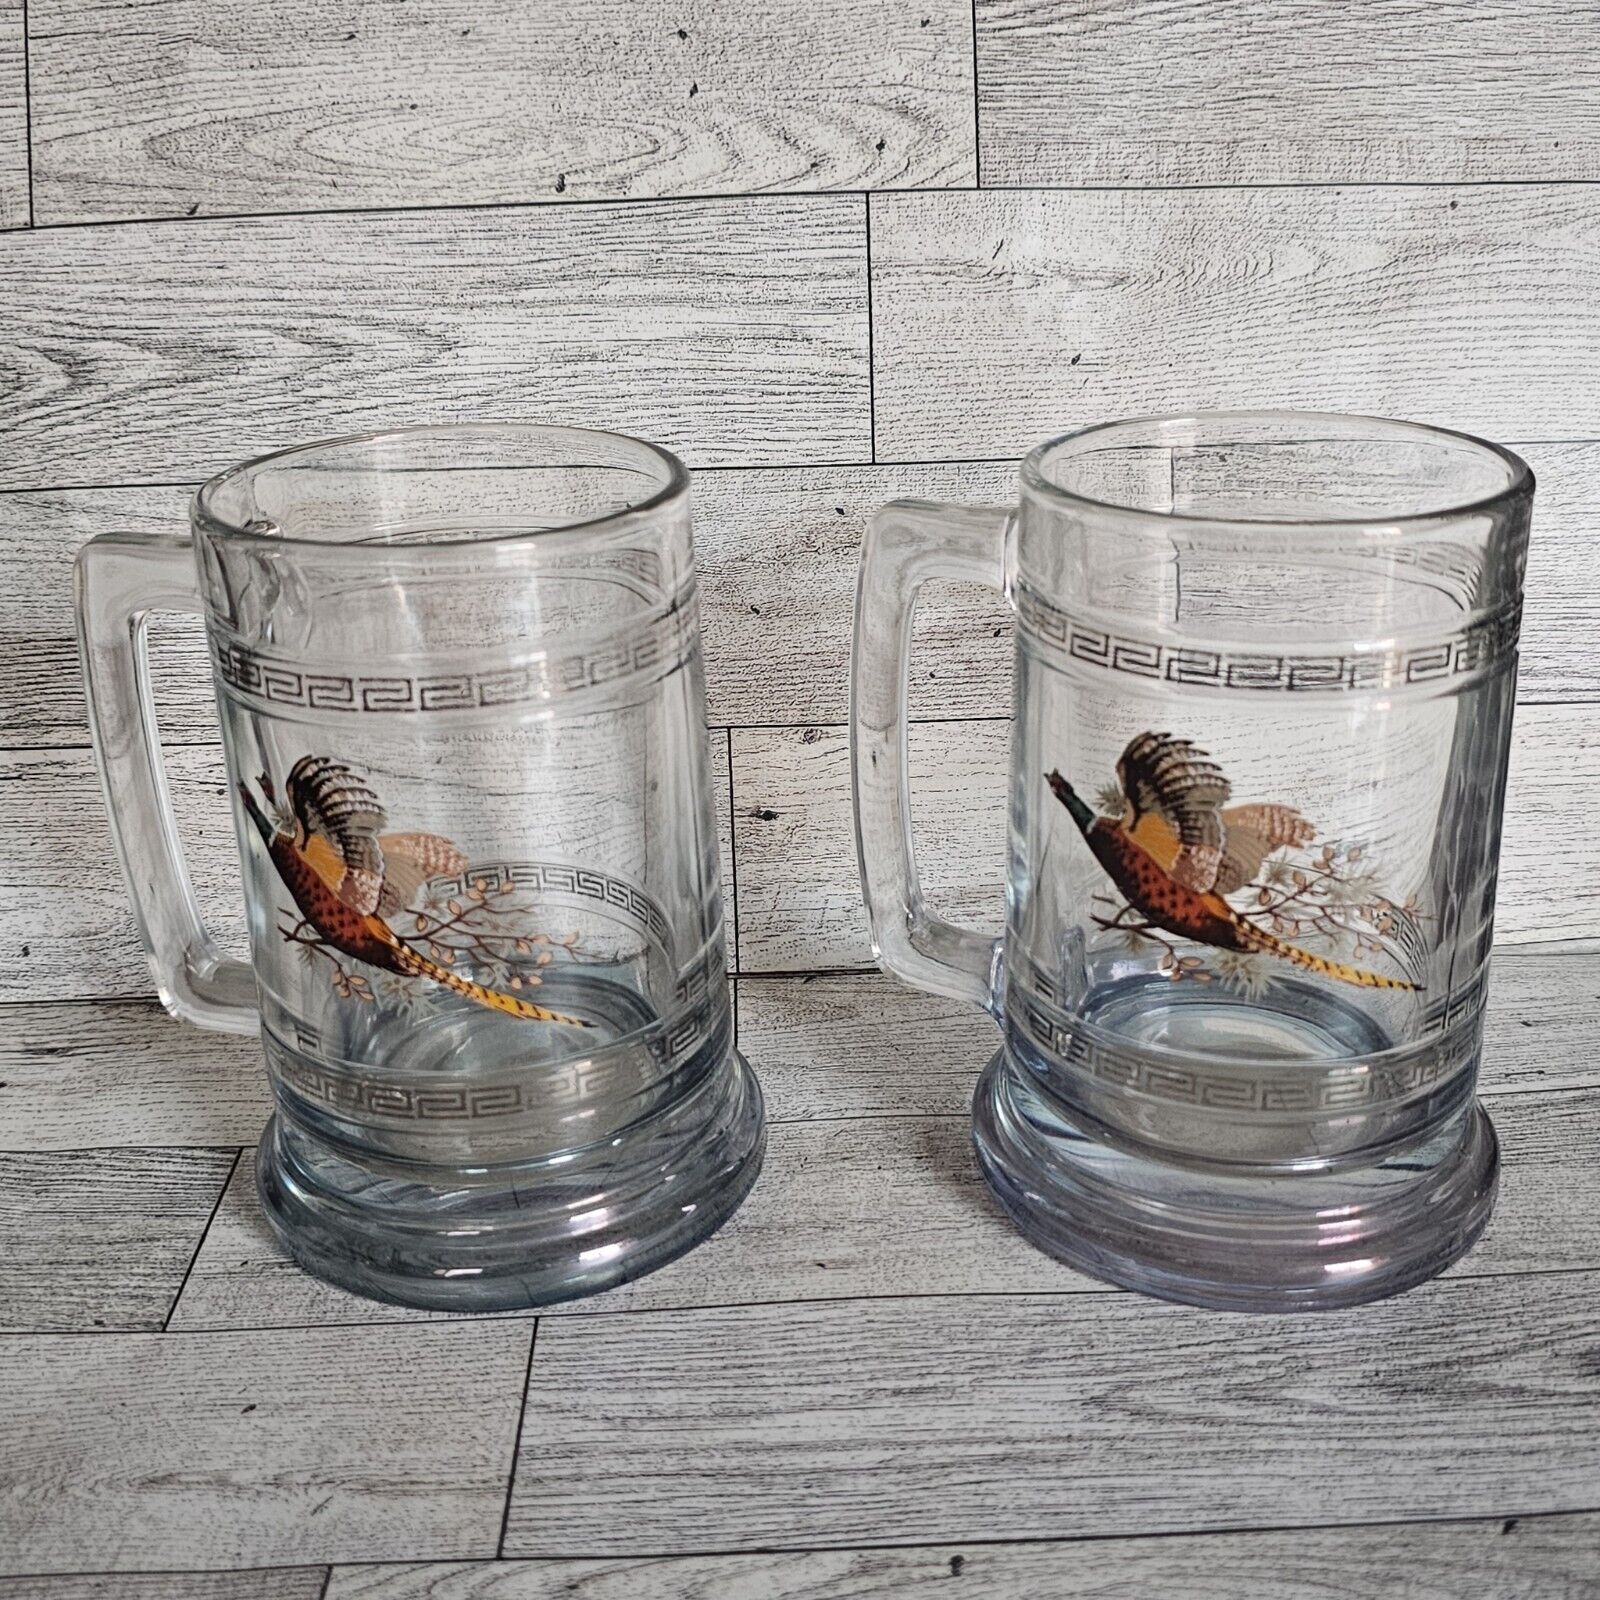 Princess House Pheasant Flying Birds Clear Glass Mugs Beer Steins Set of 2 VTG